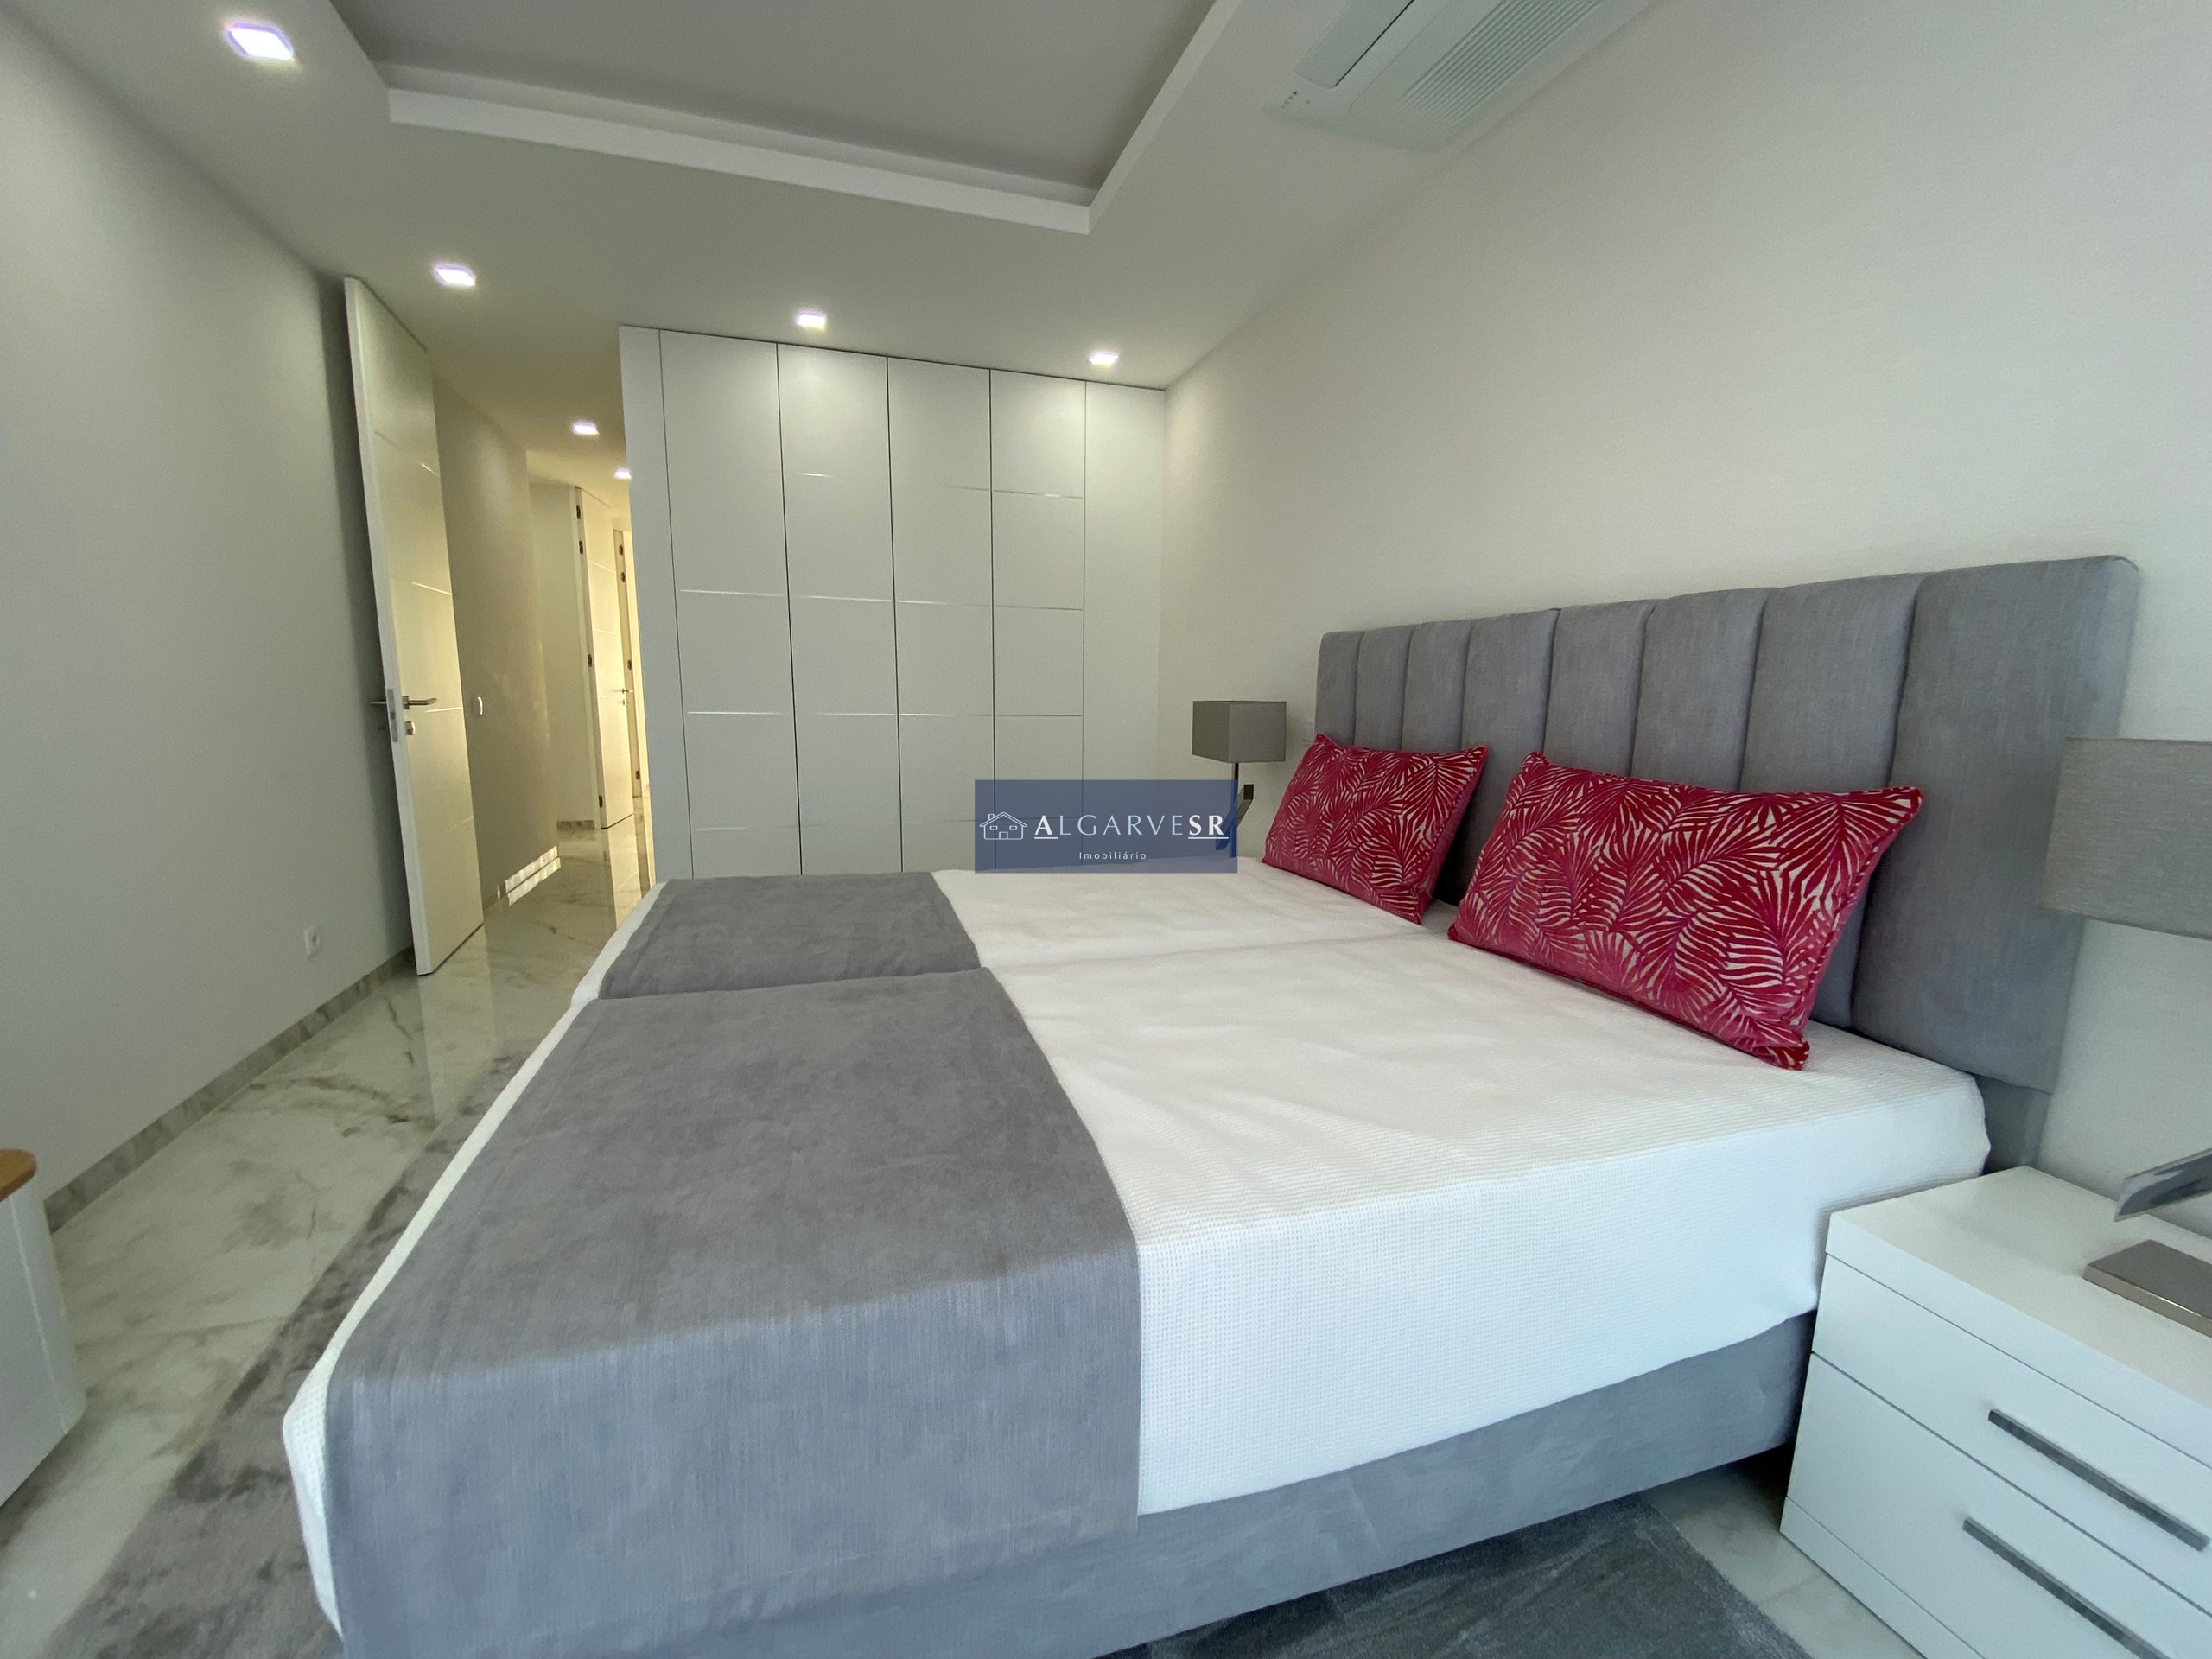 Lagos -  Apartamento T3 Novo condominio de luxo c/ piscina